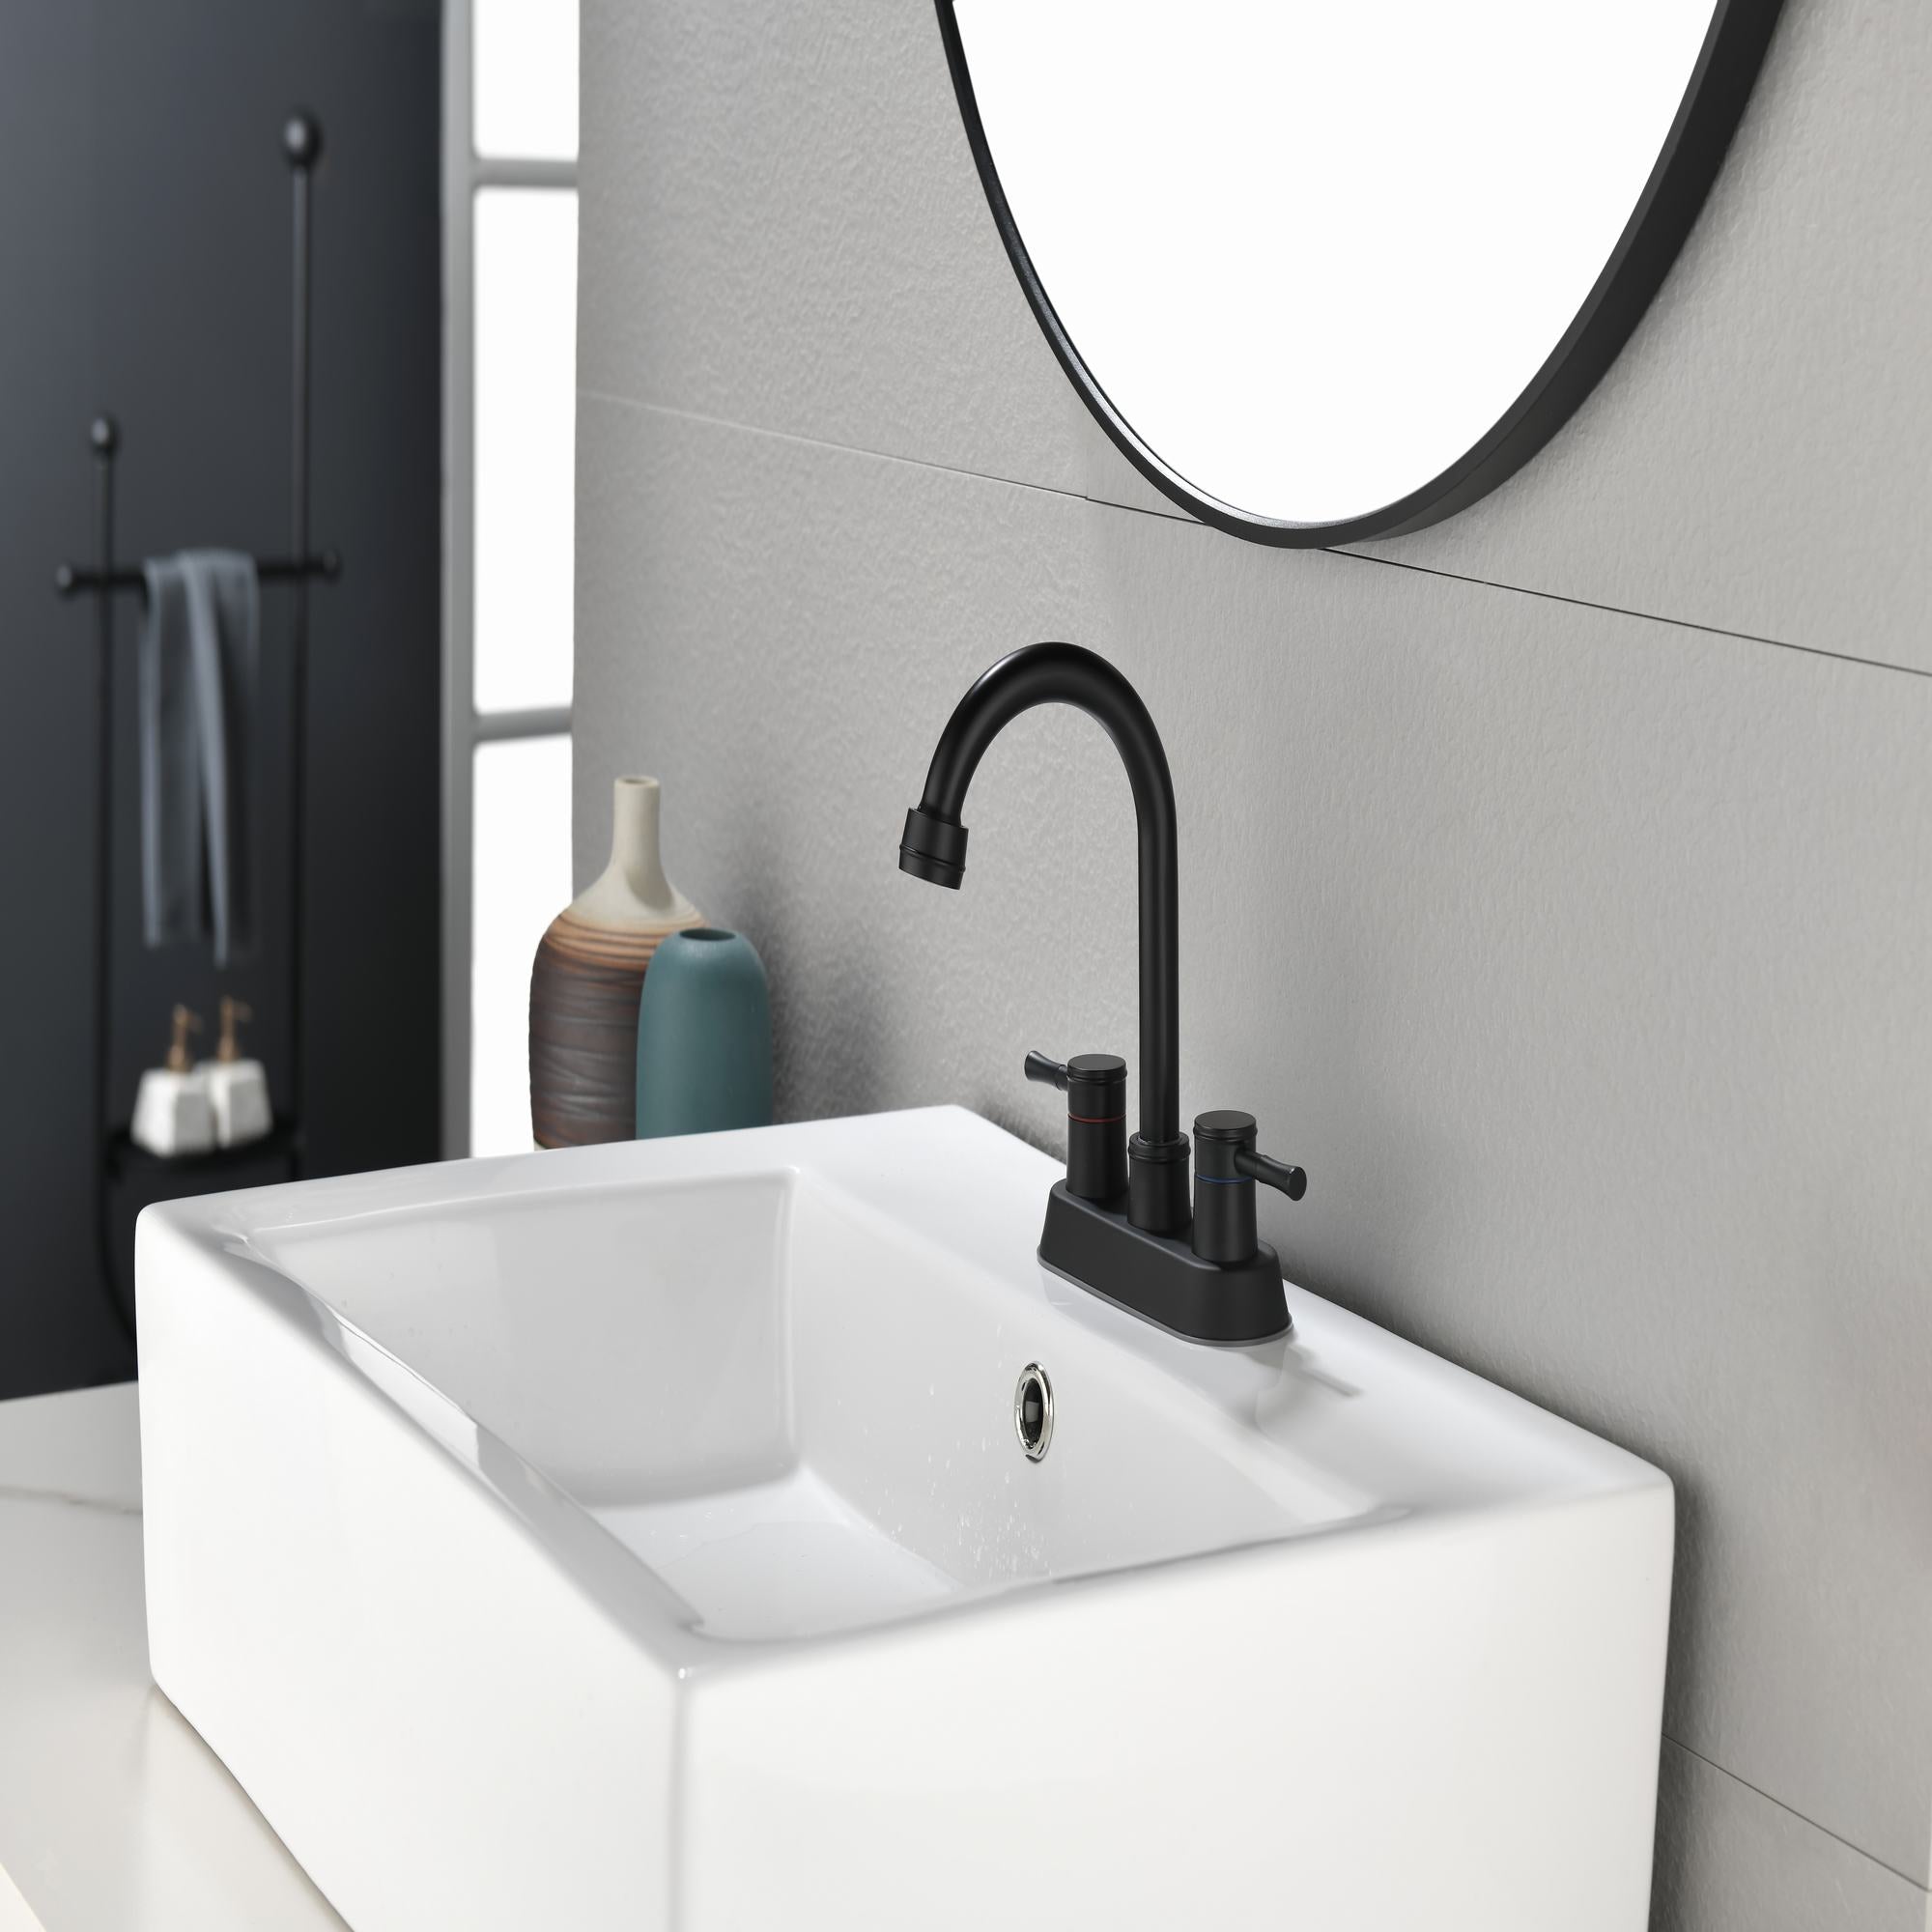 4 Inch 2 Handle Centerset Lead-Free Bathroom Sink Faucet